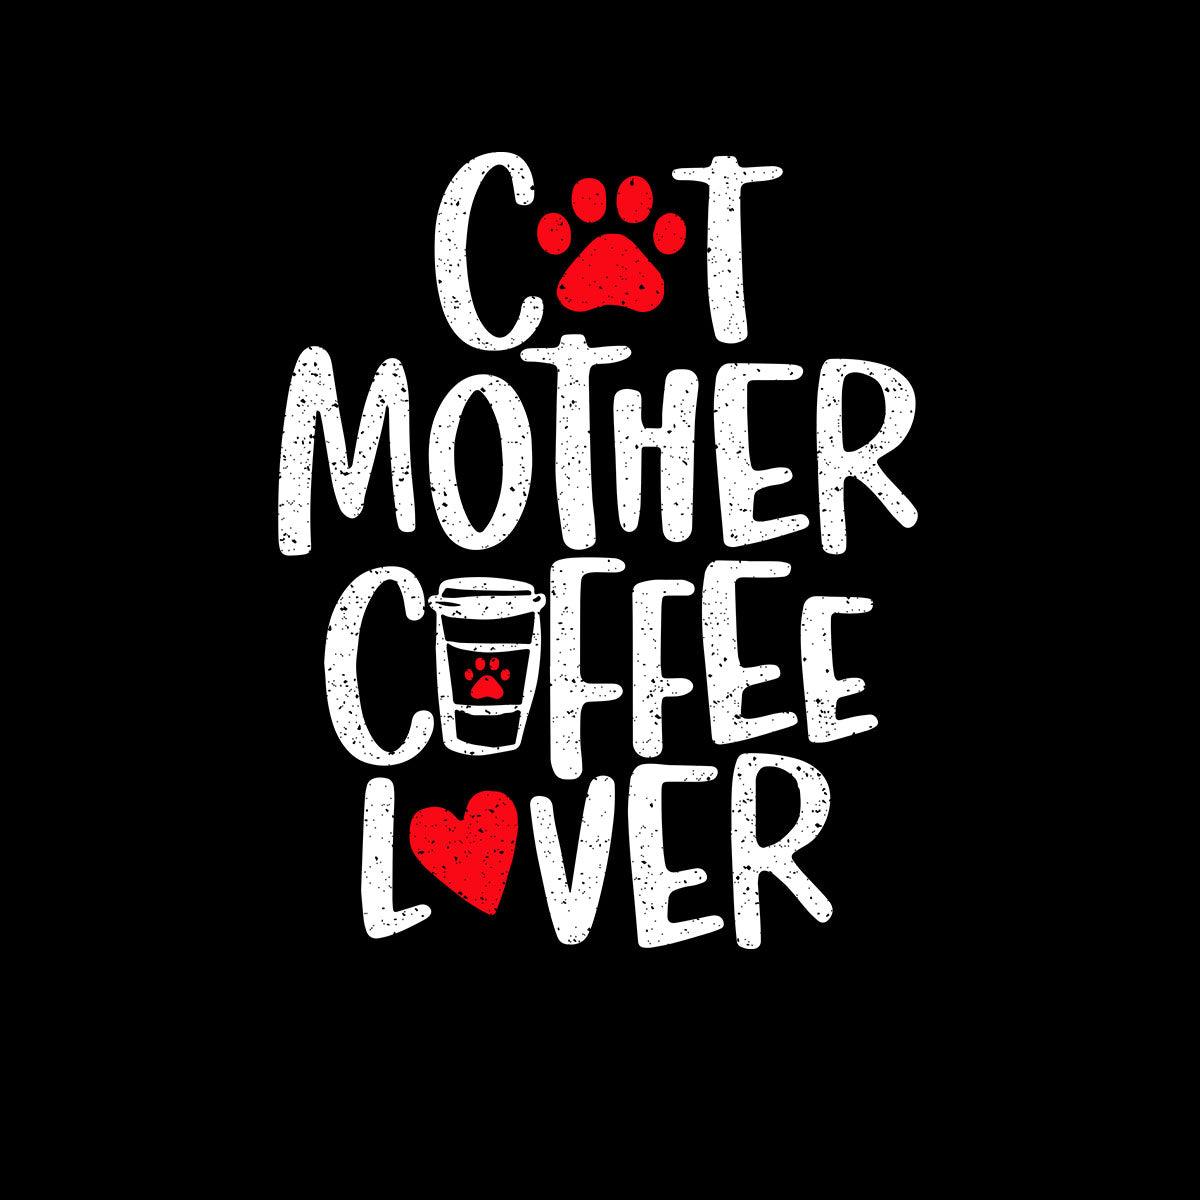 Cat Mother Coffee Lover Mens Funny T-Shirt Novelty Joke T-Shirt Rude Gift Him Dad Birthday Slogan Unisex T-Shirt - Kuzi Tees